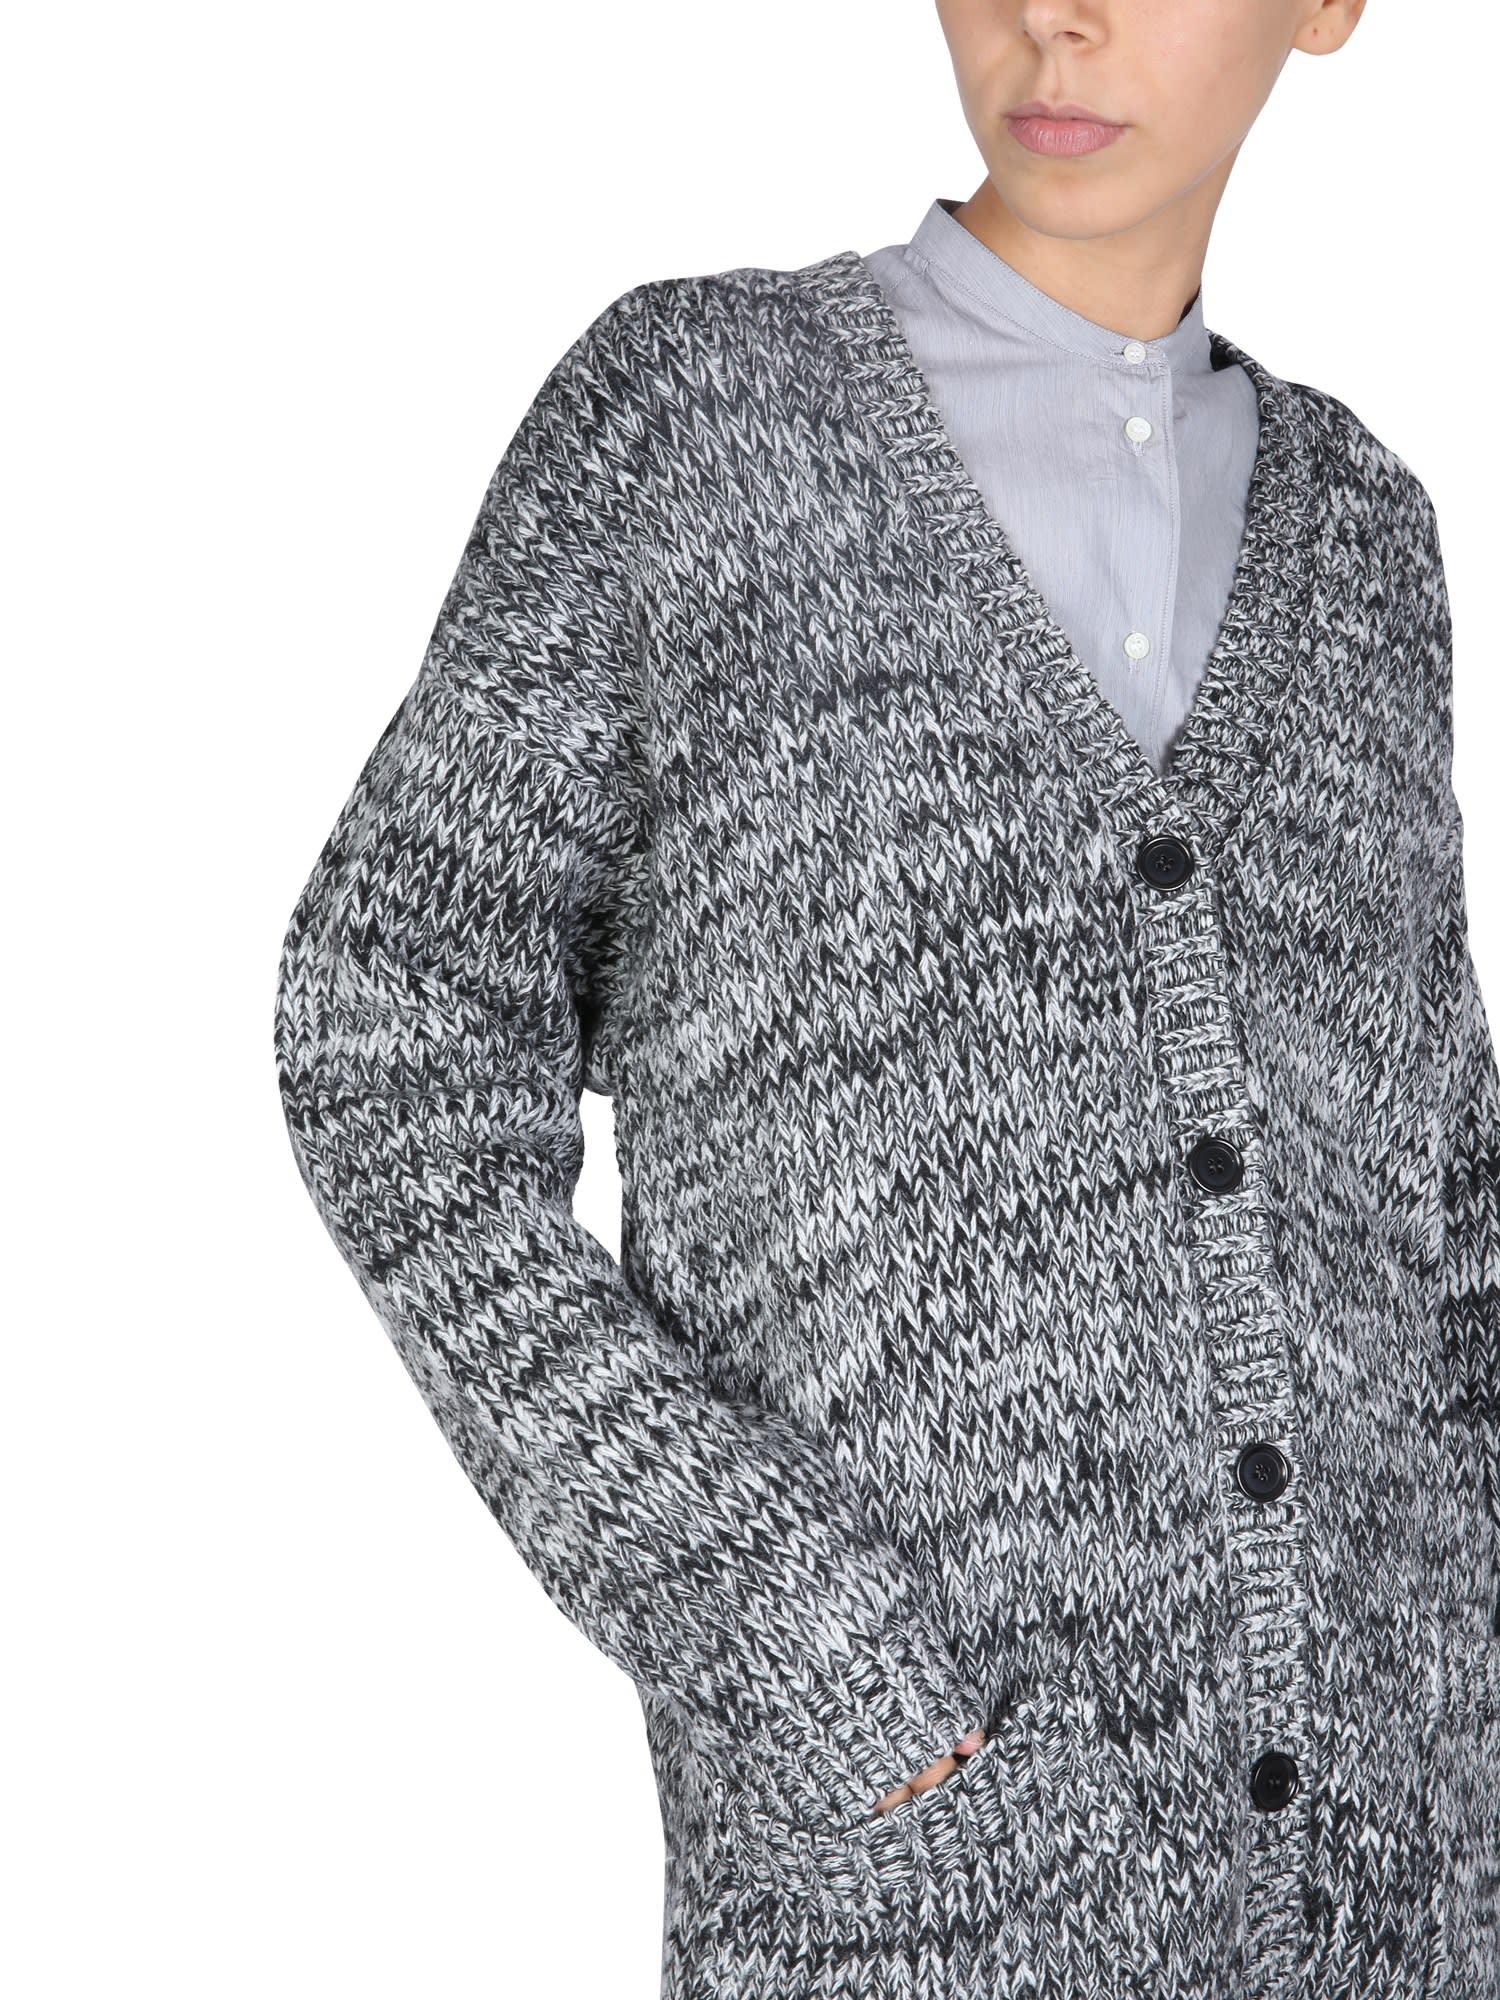 Aspesi Virgin Wool Oversized Cardigan in Black (Gray) - Save 30% | Lyst